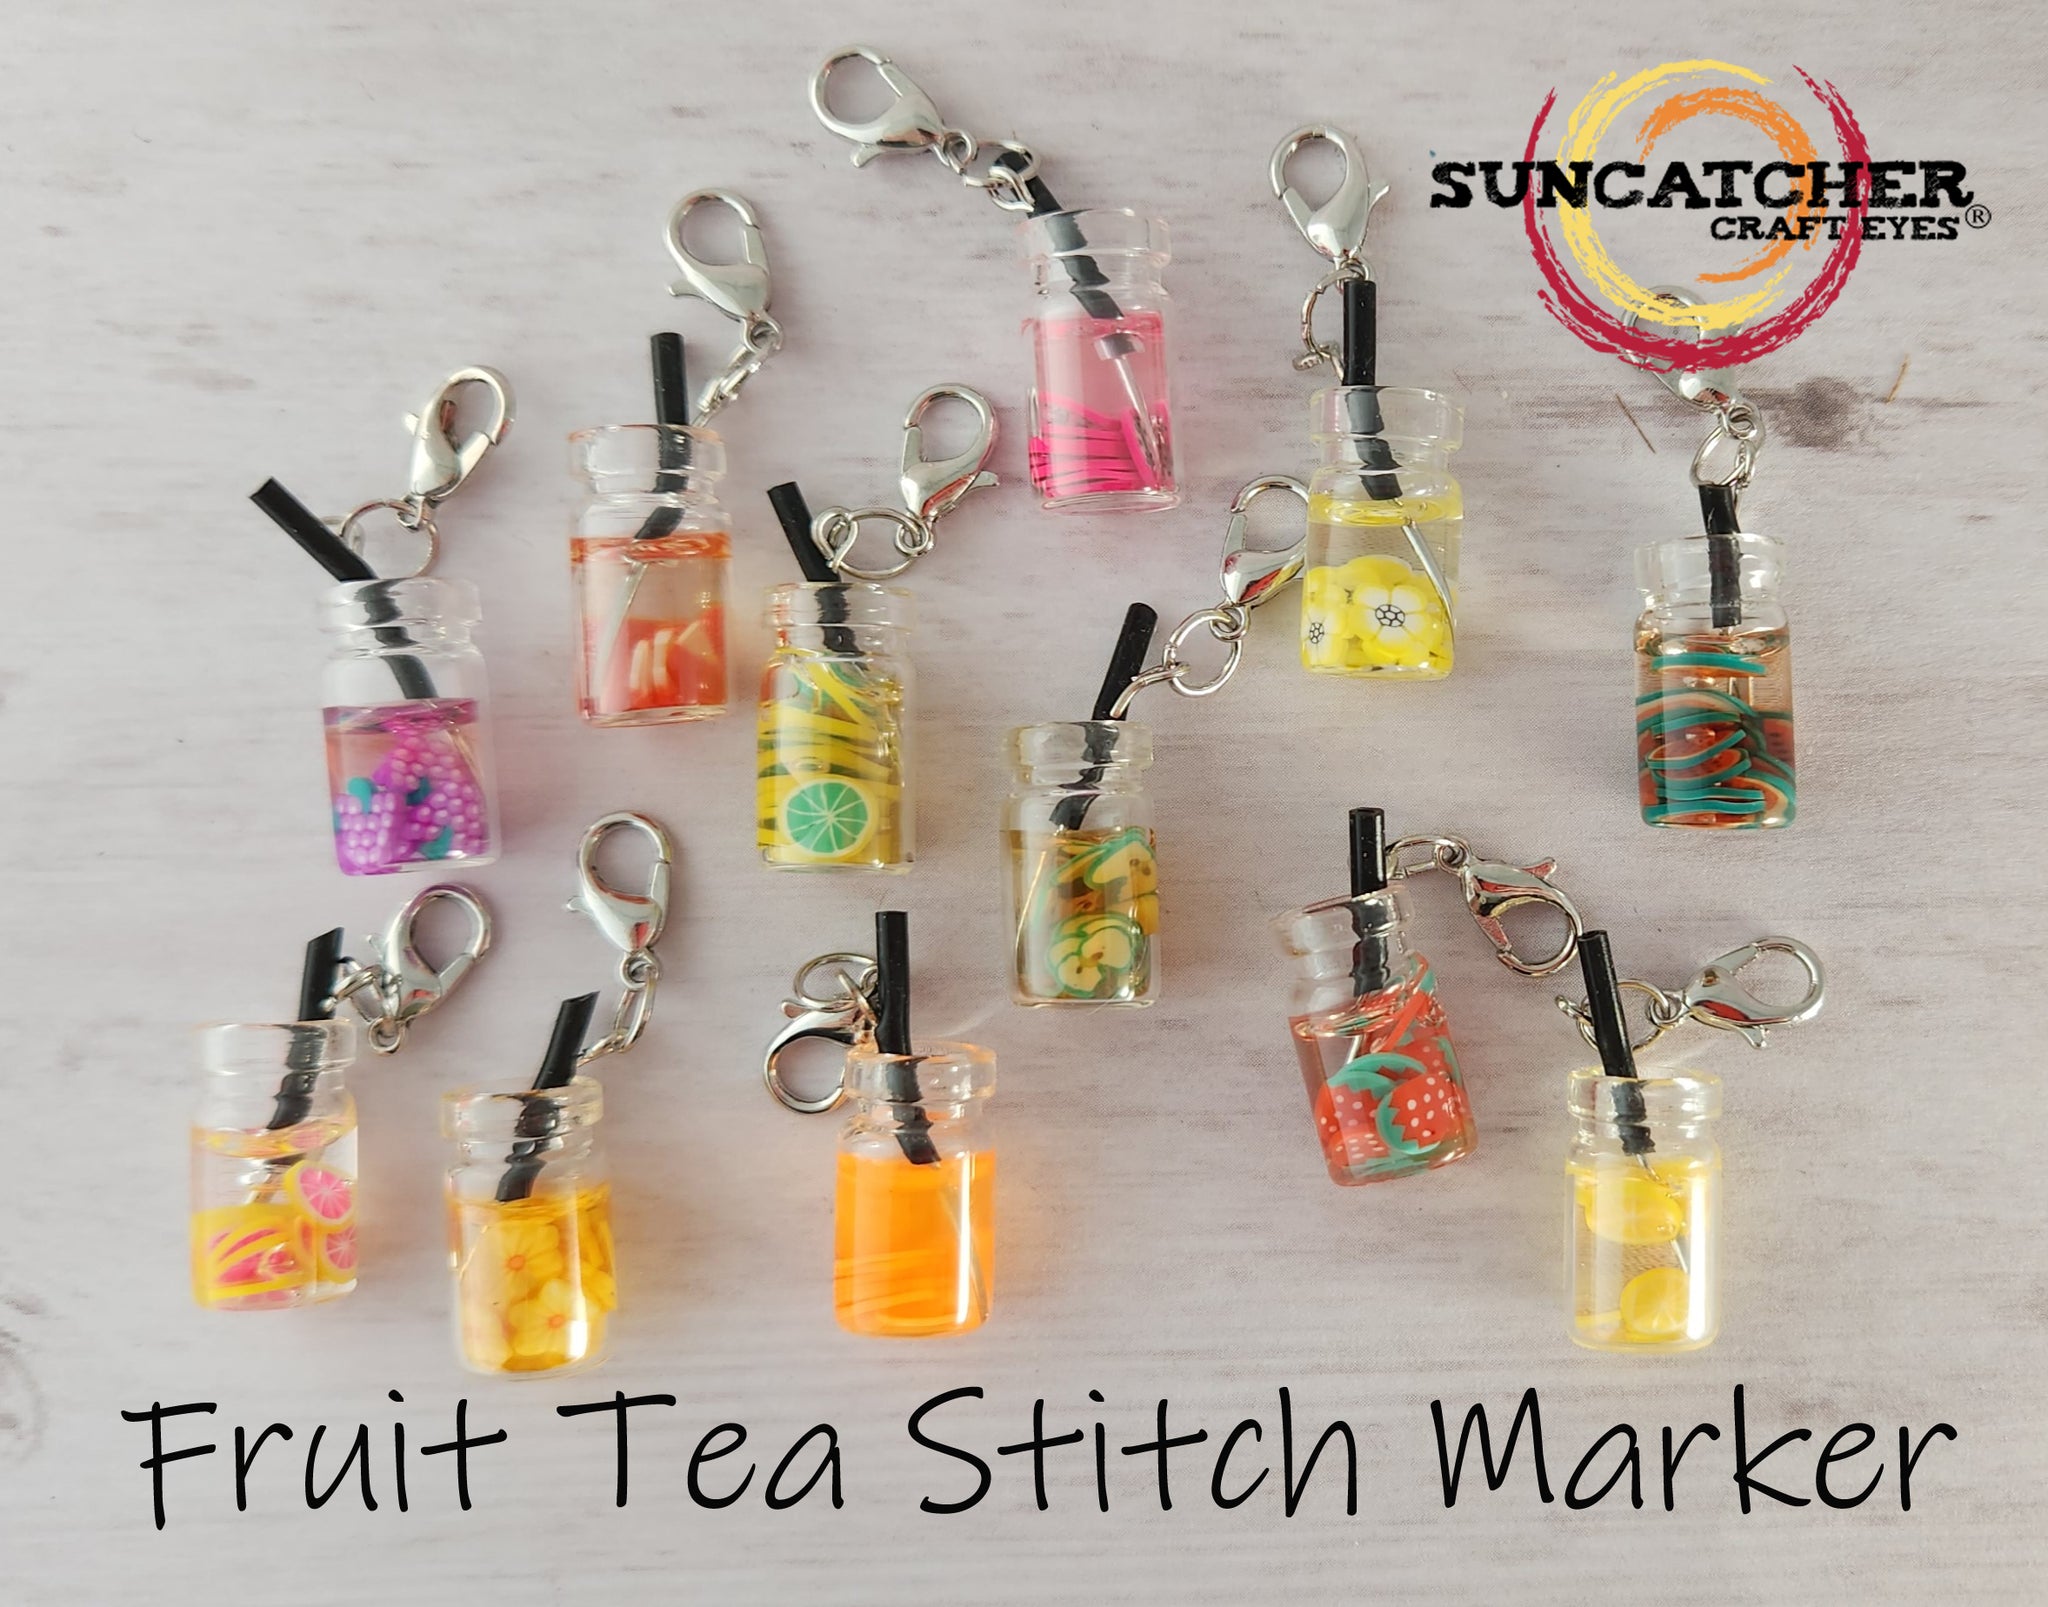 Fruit Tea Stitch Marker – Suncatcher Craft Eyes